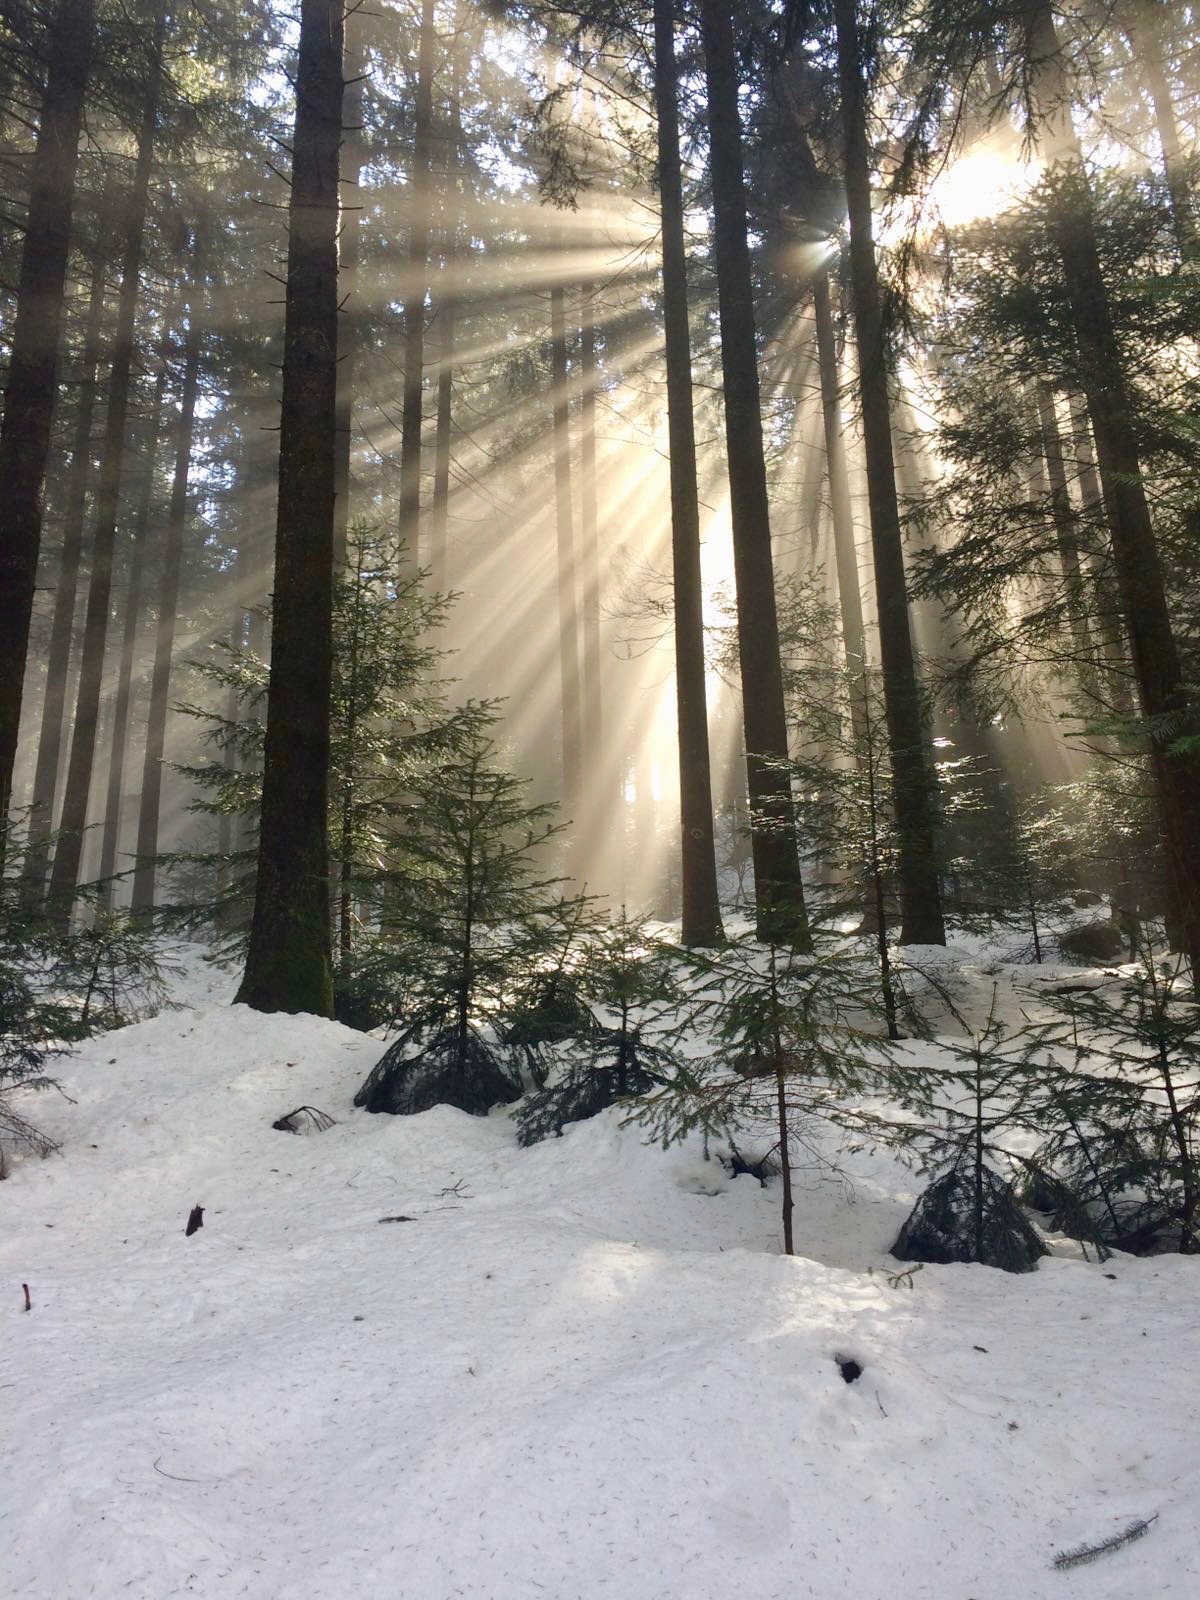 Sun shining through trees onto snow